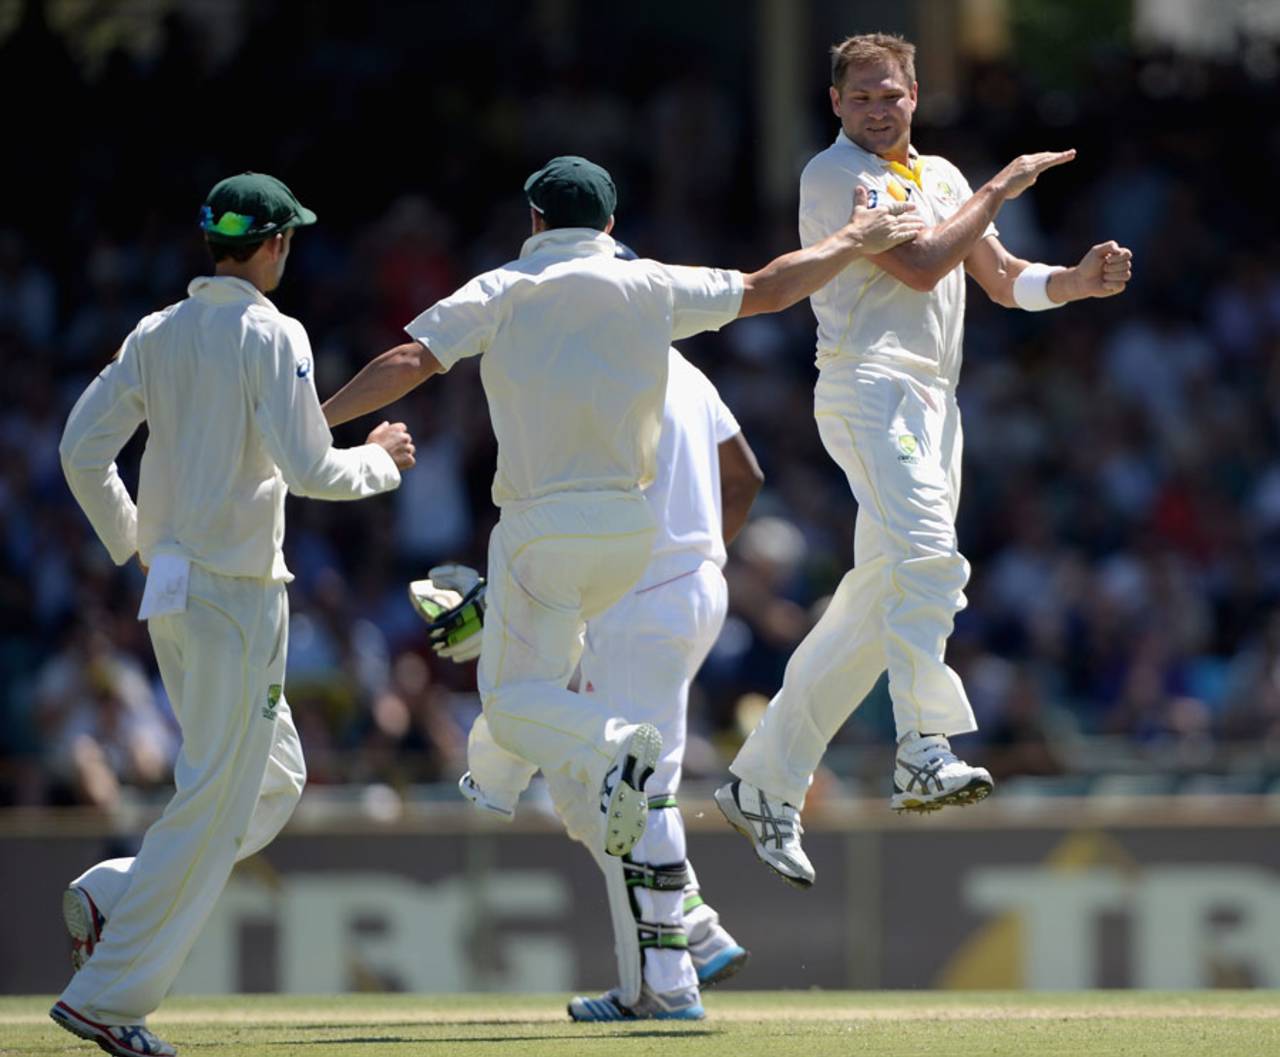 Ryan Harris broke a promising opening partnership by England, Australia v England, 3rd Test, Perth, 2nd day, December 14, 2013